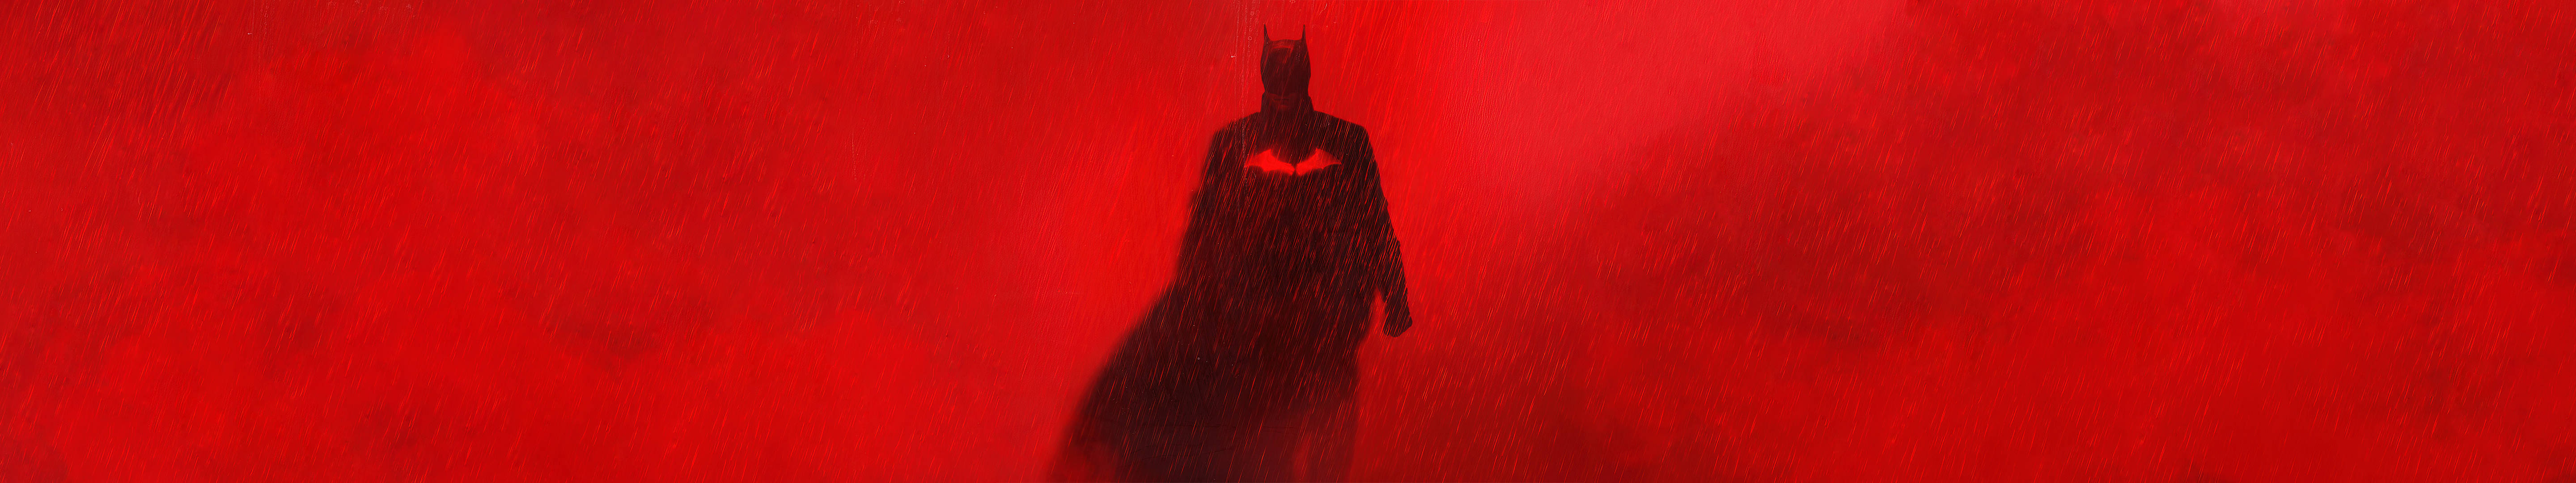 Batmanim Regen Auf Drei Bildschirmen Wallpaper